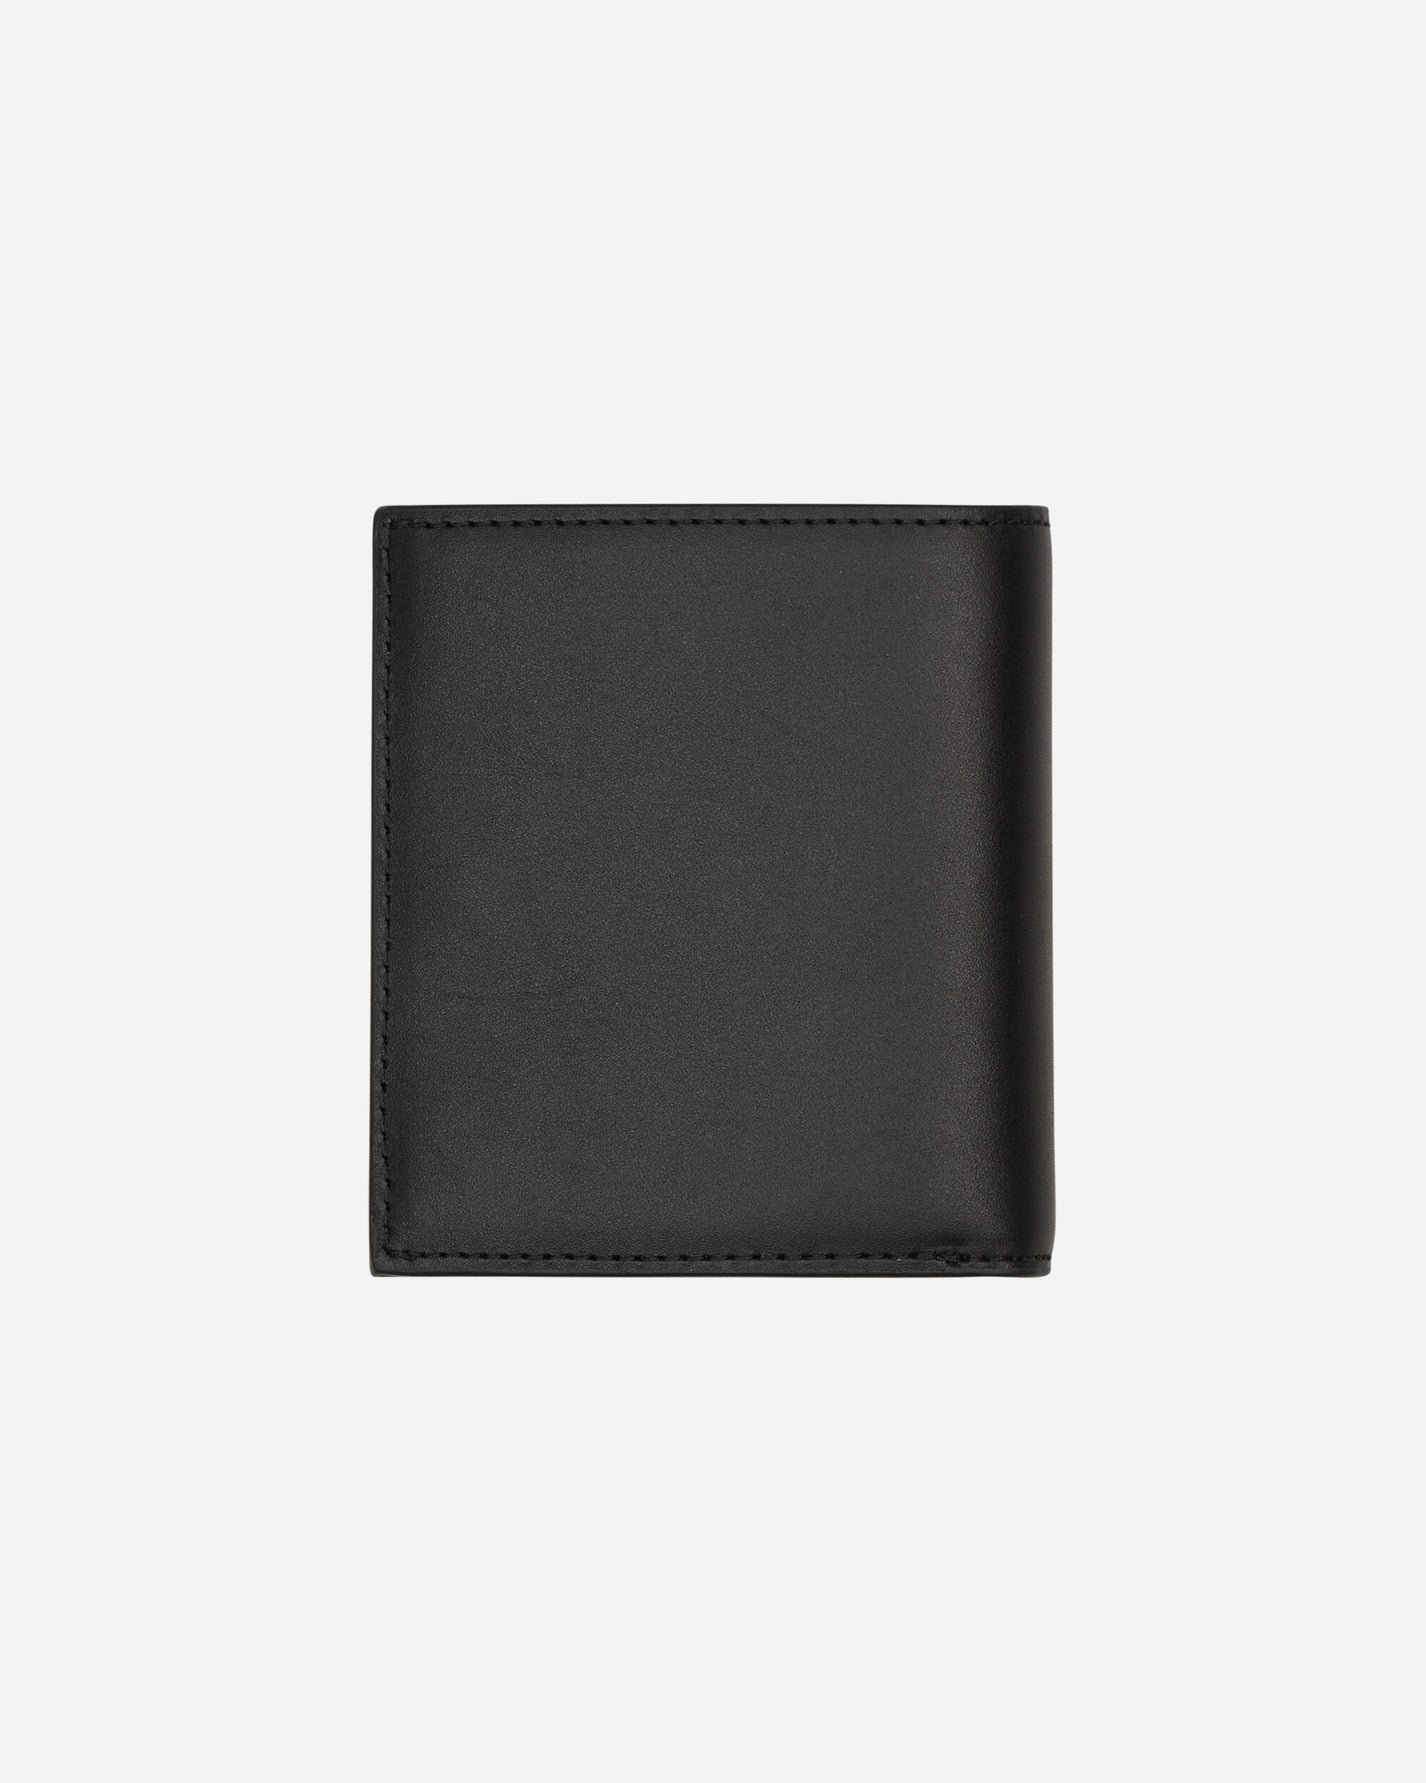 KENZO Paris Mini Fold Wallet Black Wallets and Cardholders Wallets FD55PM403L43 99